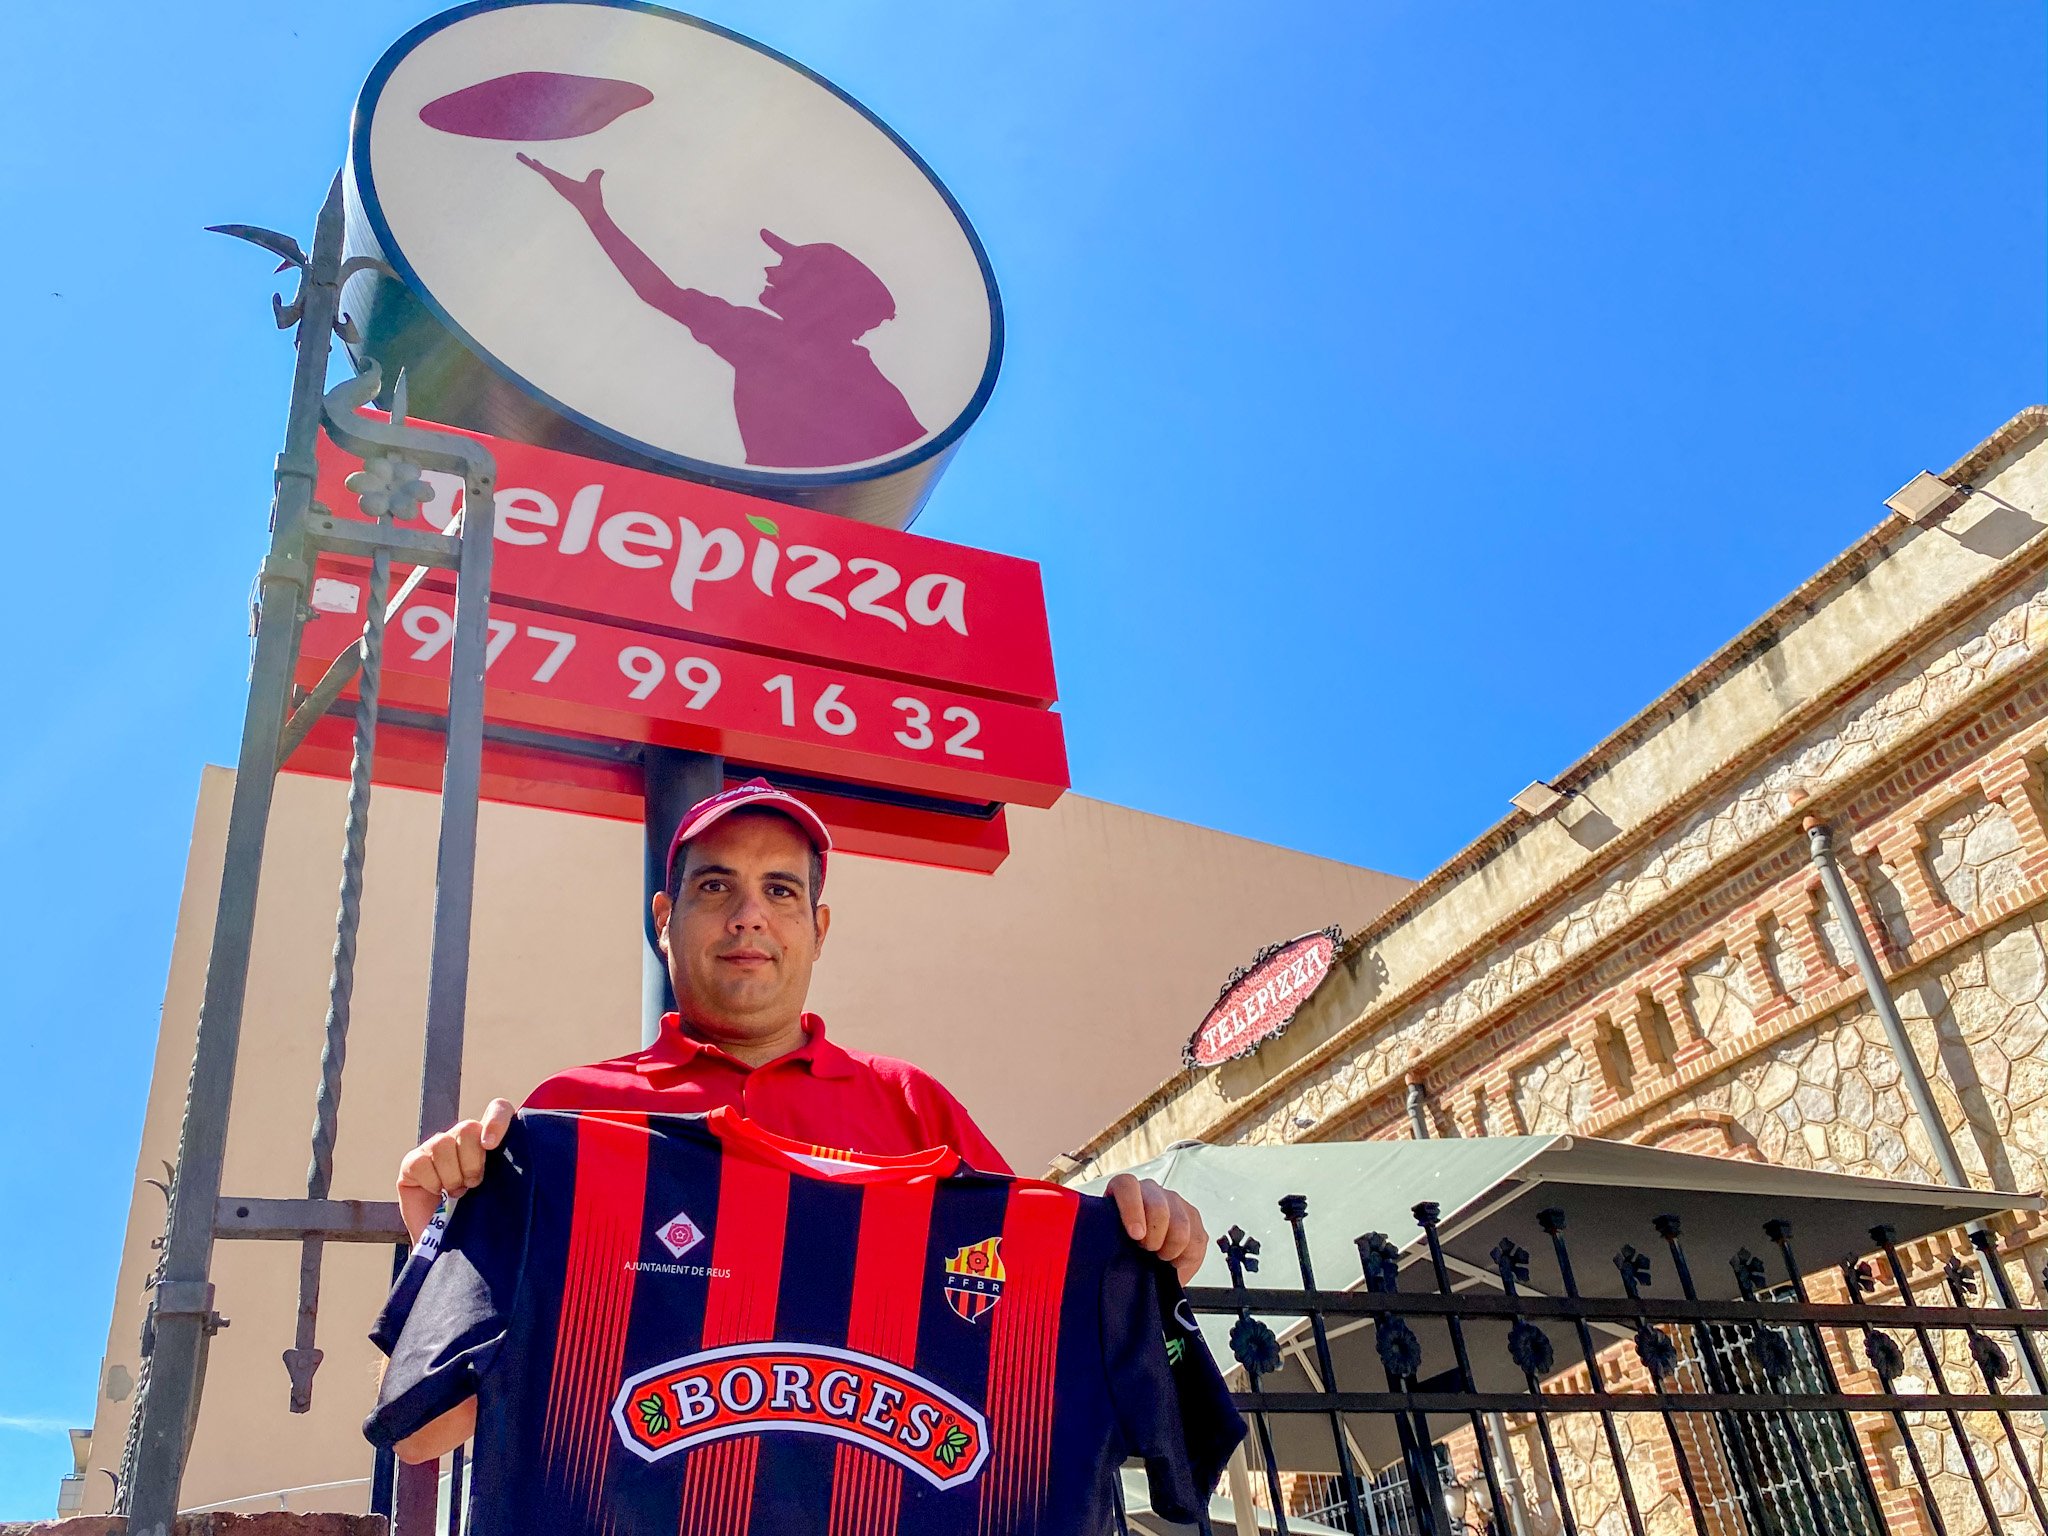 Telepizza fitxa al jugador del Reus Genuine Raul Moreno